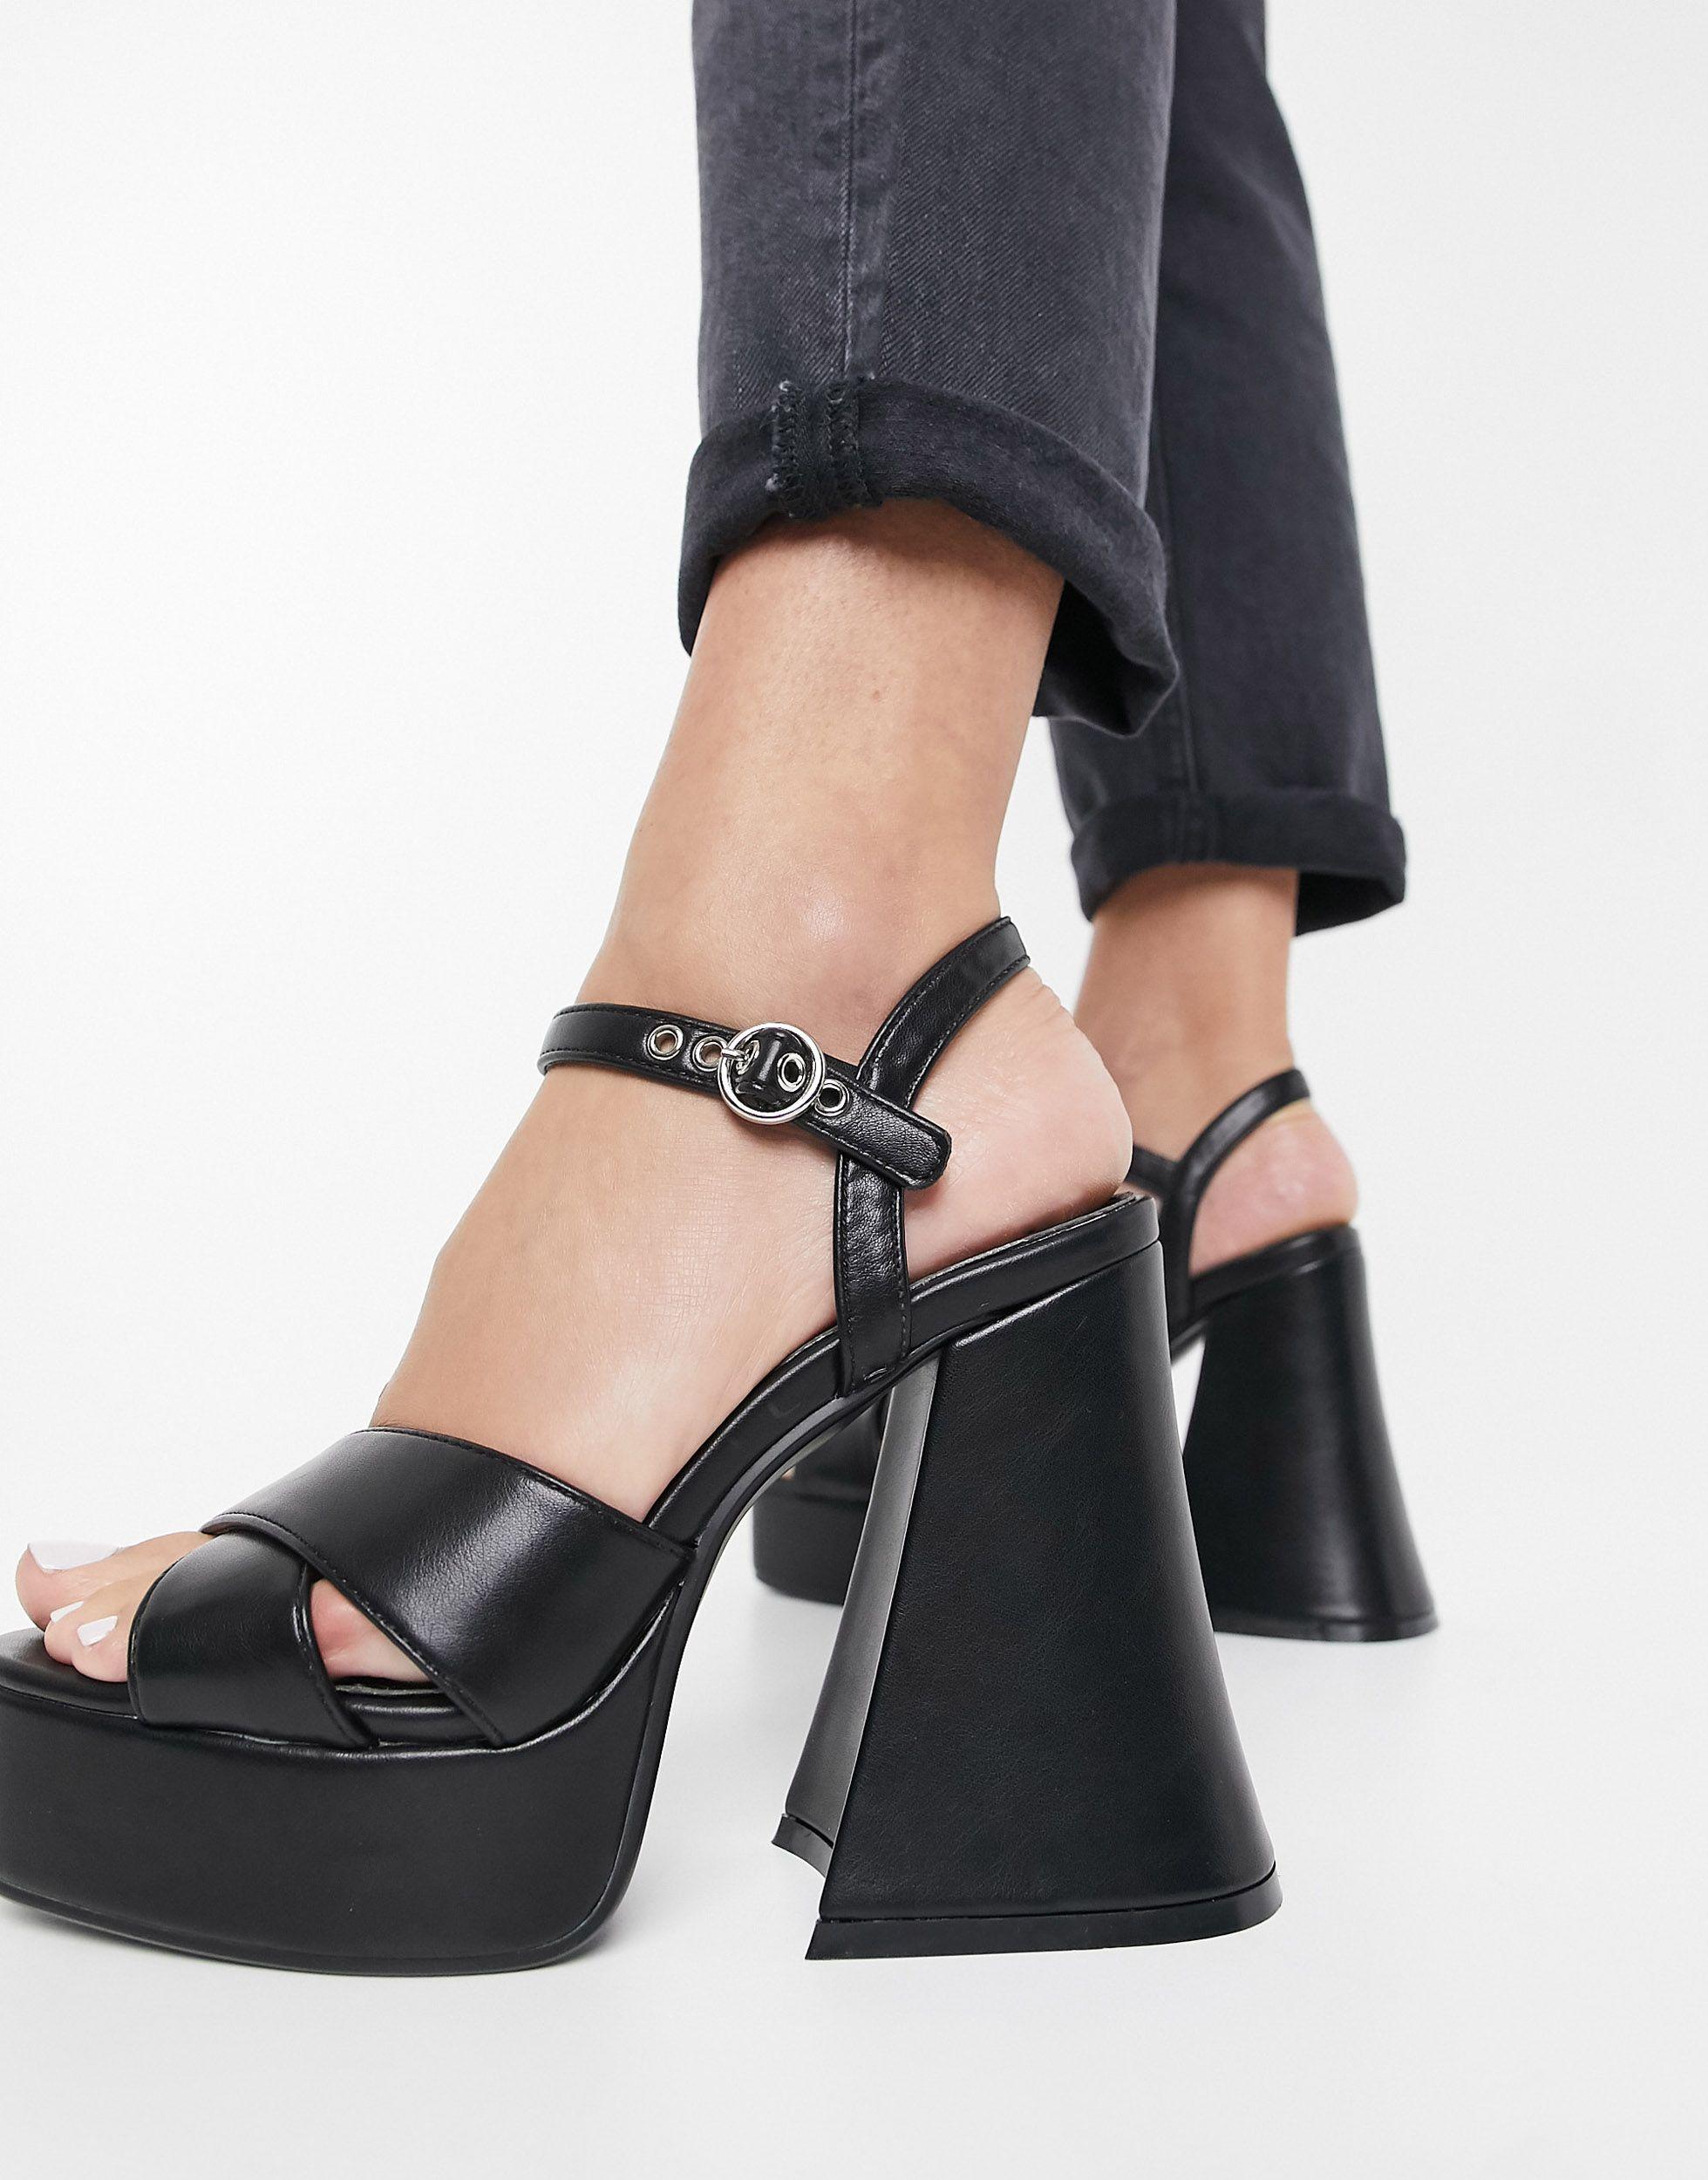 Black Pu Platform Strappy High Heels | PrettyLittleThing-nlmtdanang.com.vn